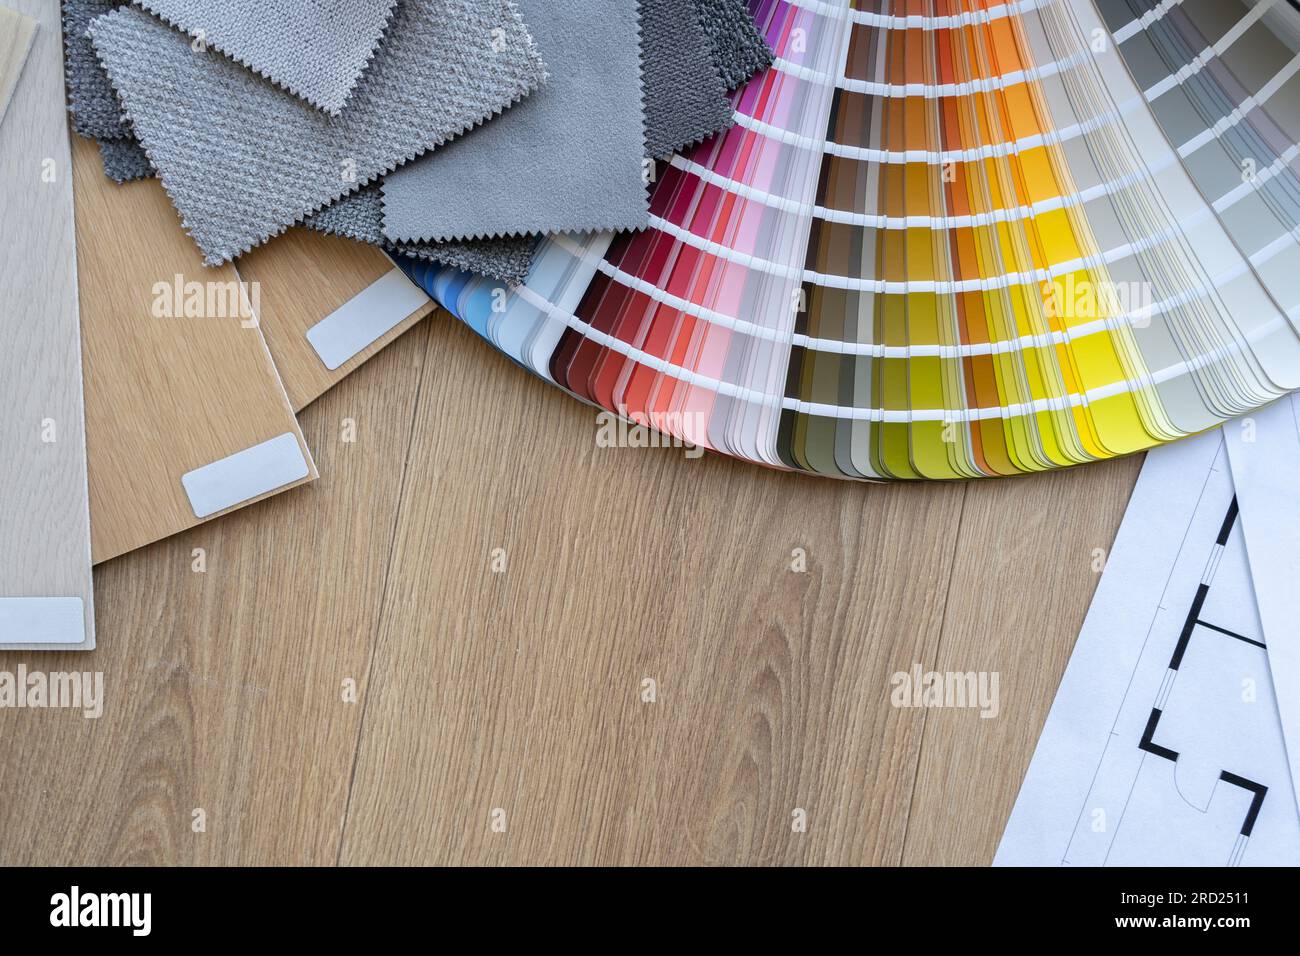 Farbschema-Palette Katalog, Farbmuster. Holzfußboden, Möbelmaterial. Blueprint-Projekte. Innendesign flach liegend, Kopierraum. Stockfoto